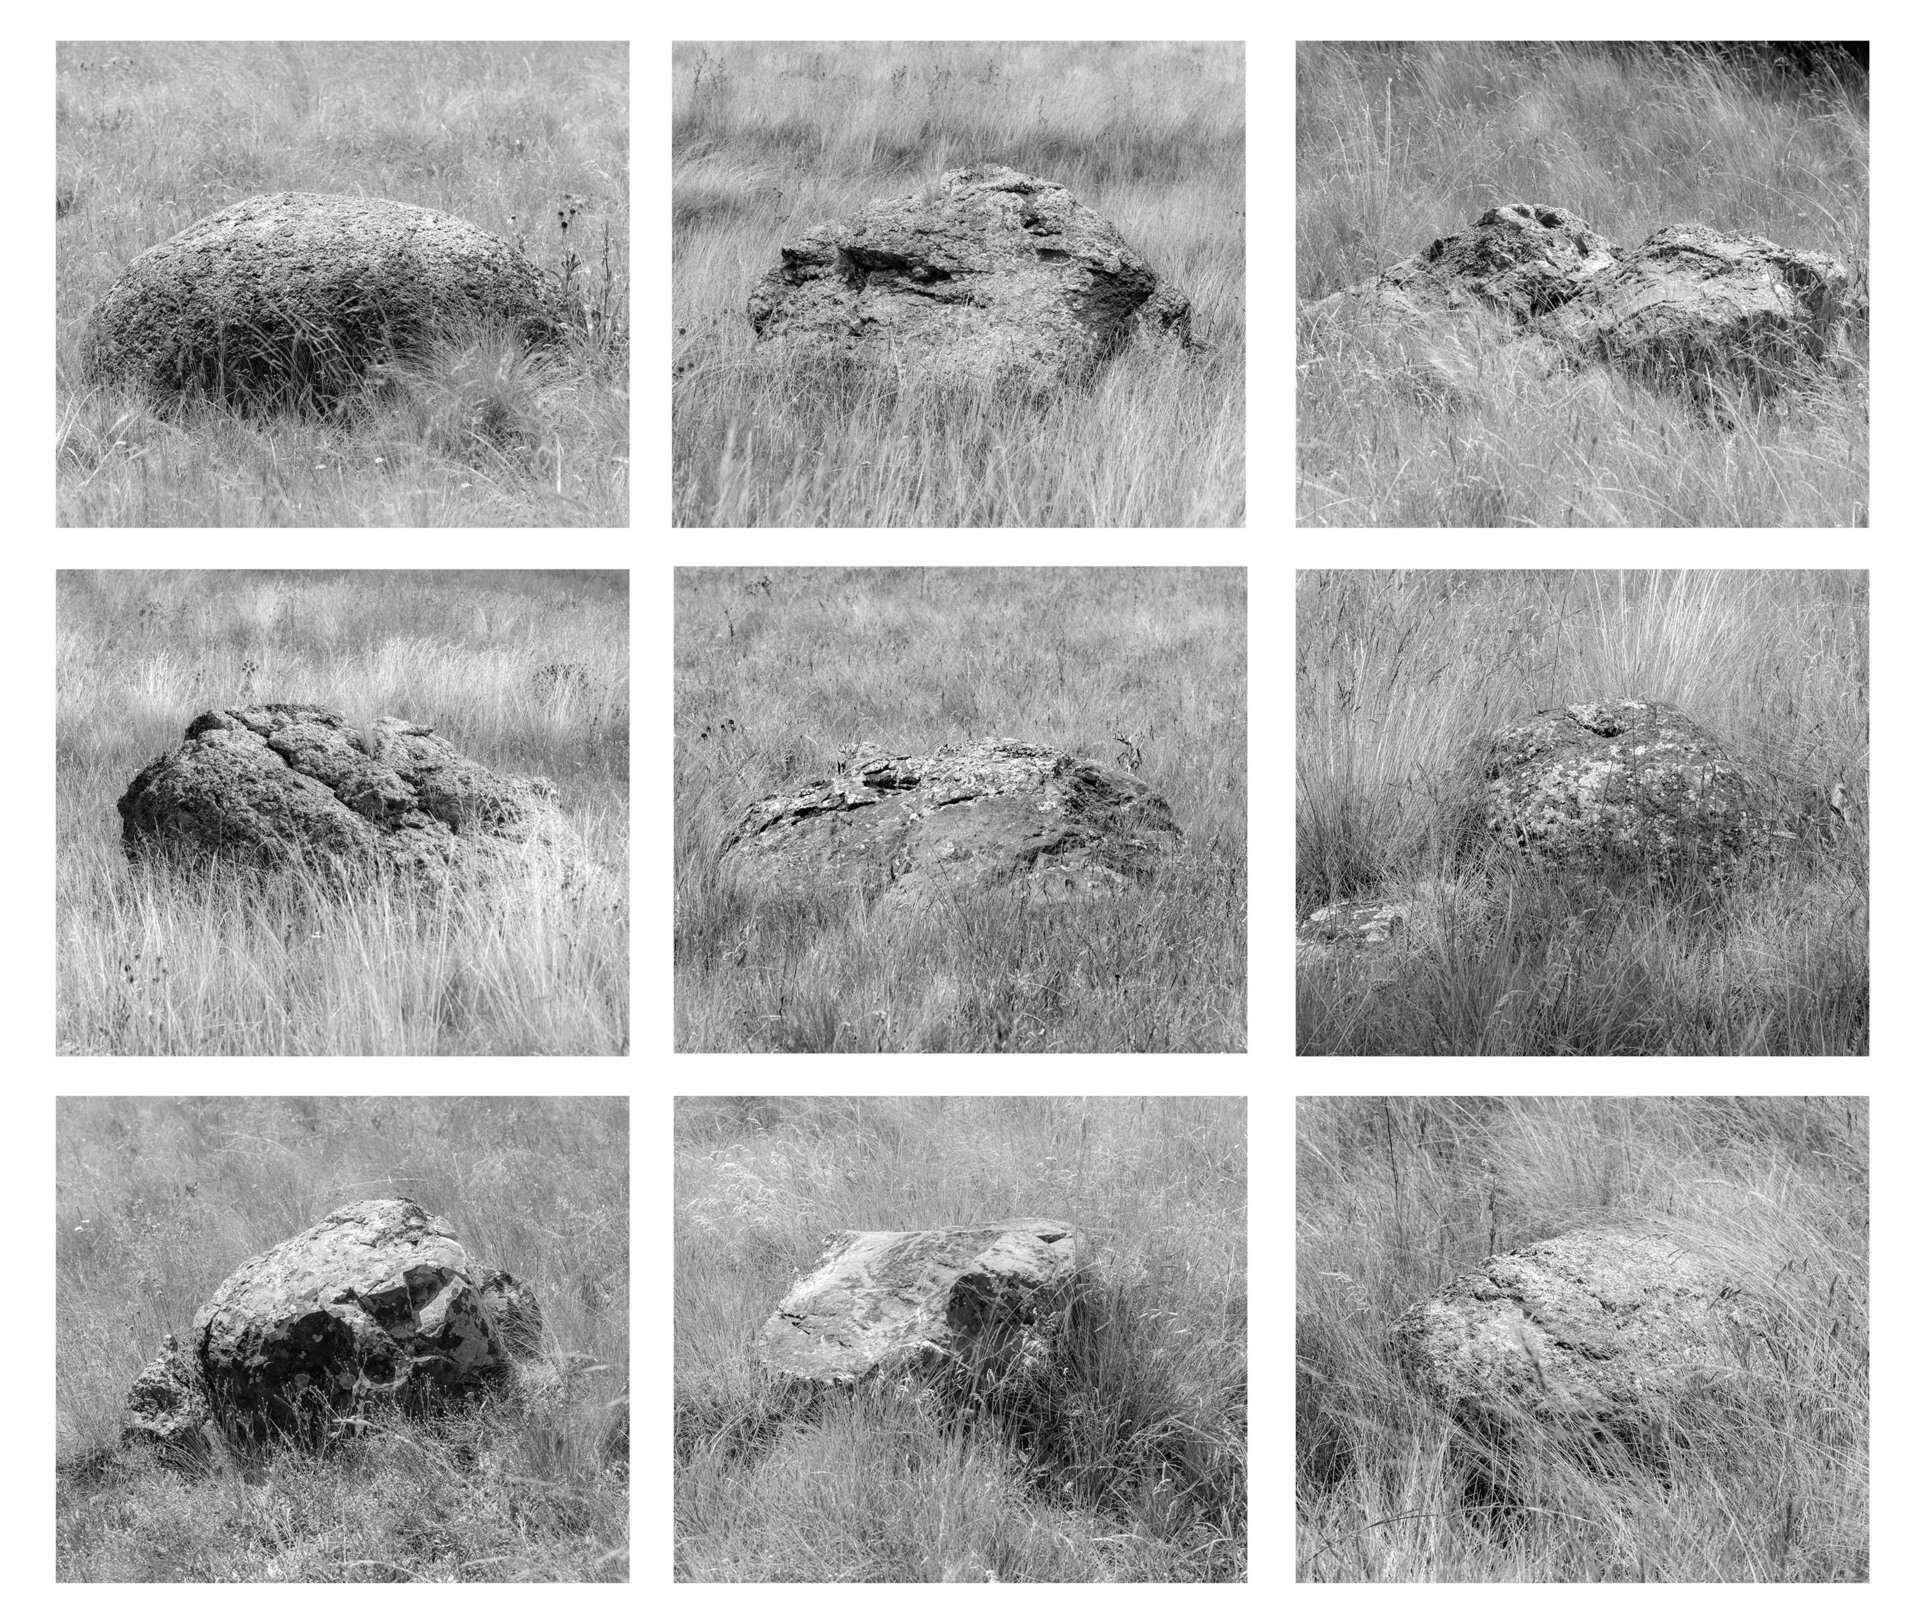   Typology - Rocks in the Grass,  2019  Inkjet print  17" x 22" 